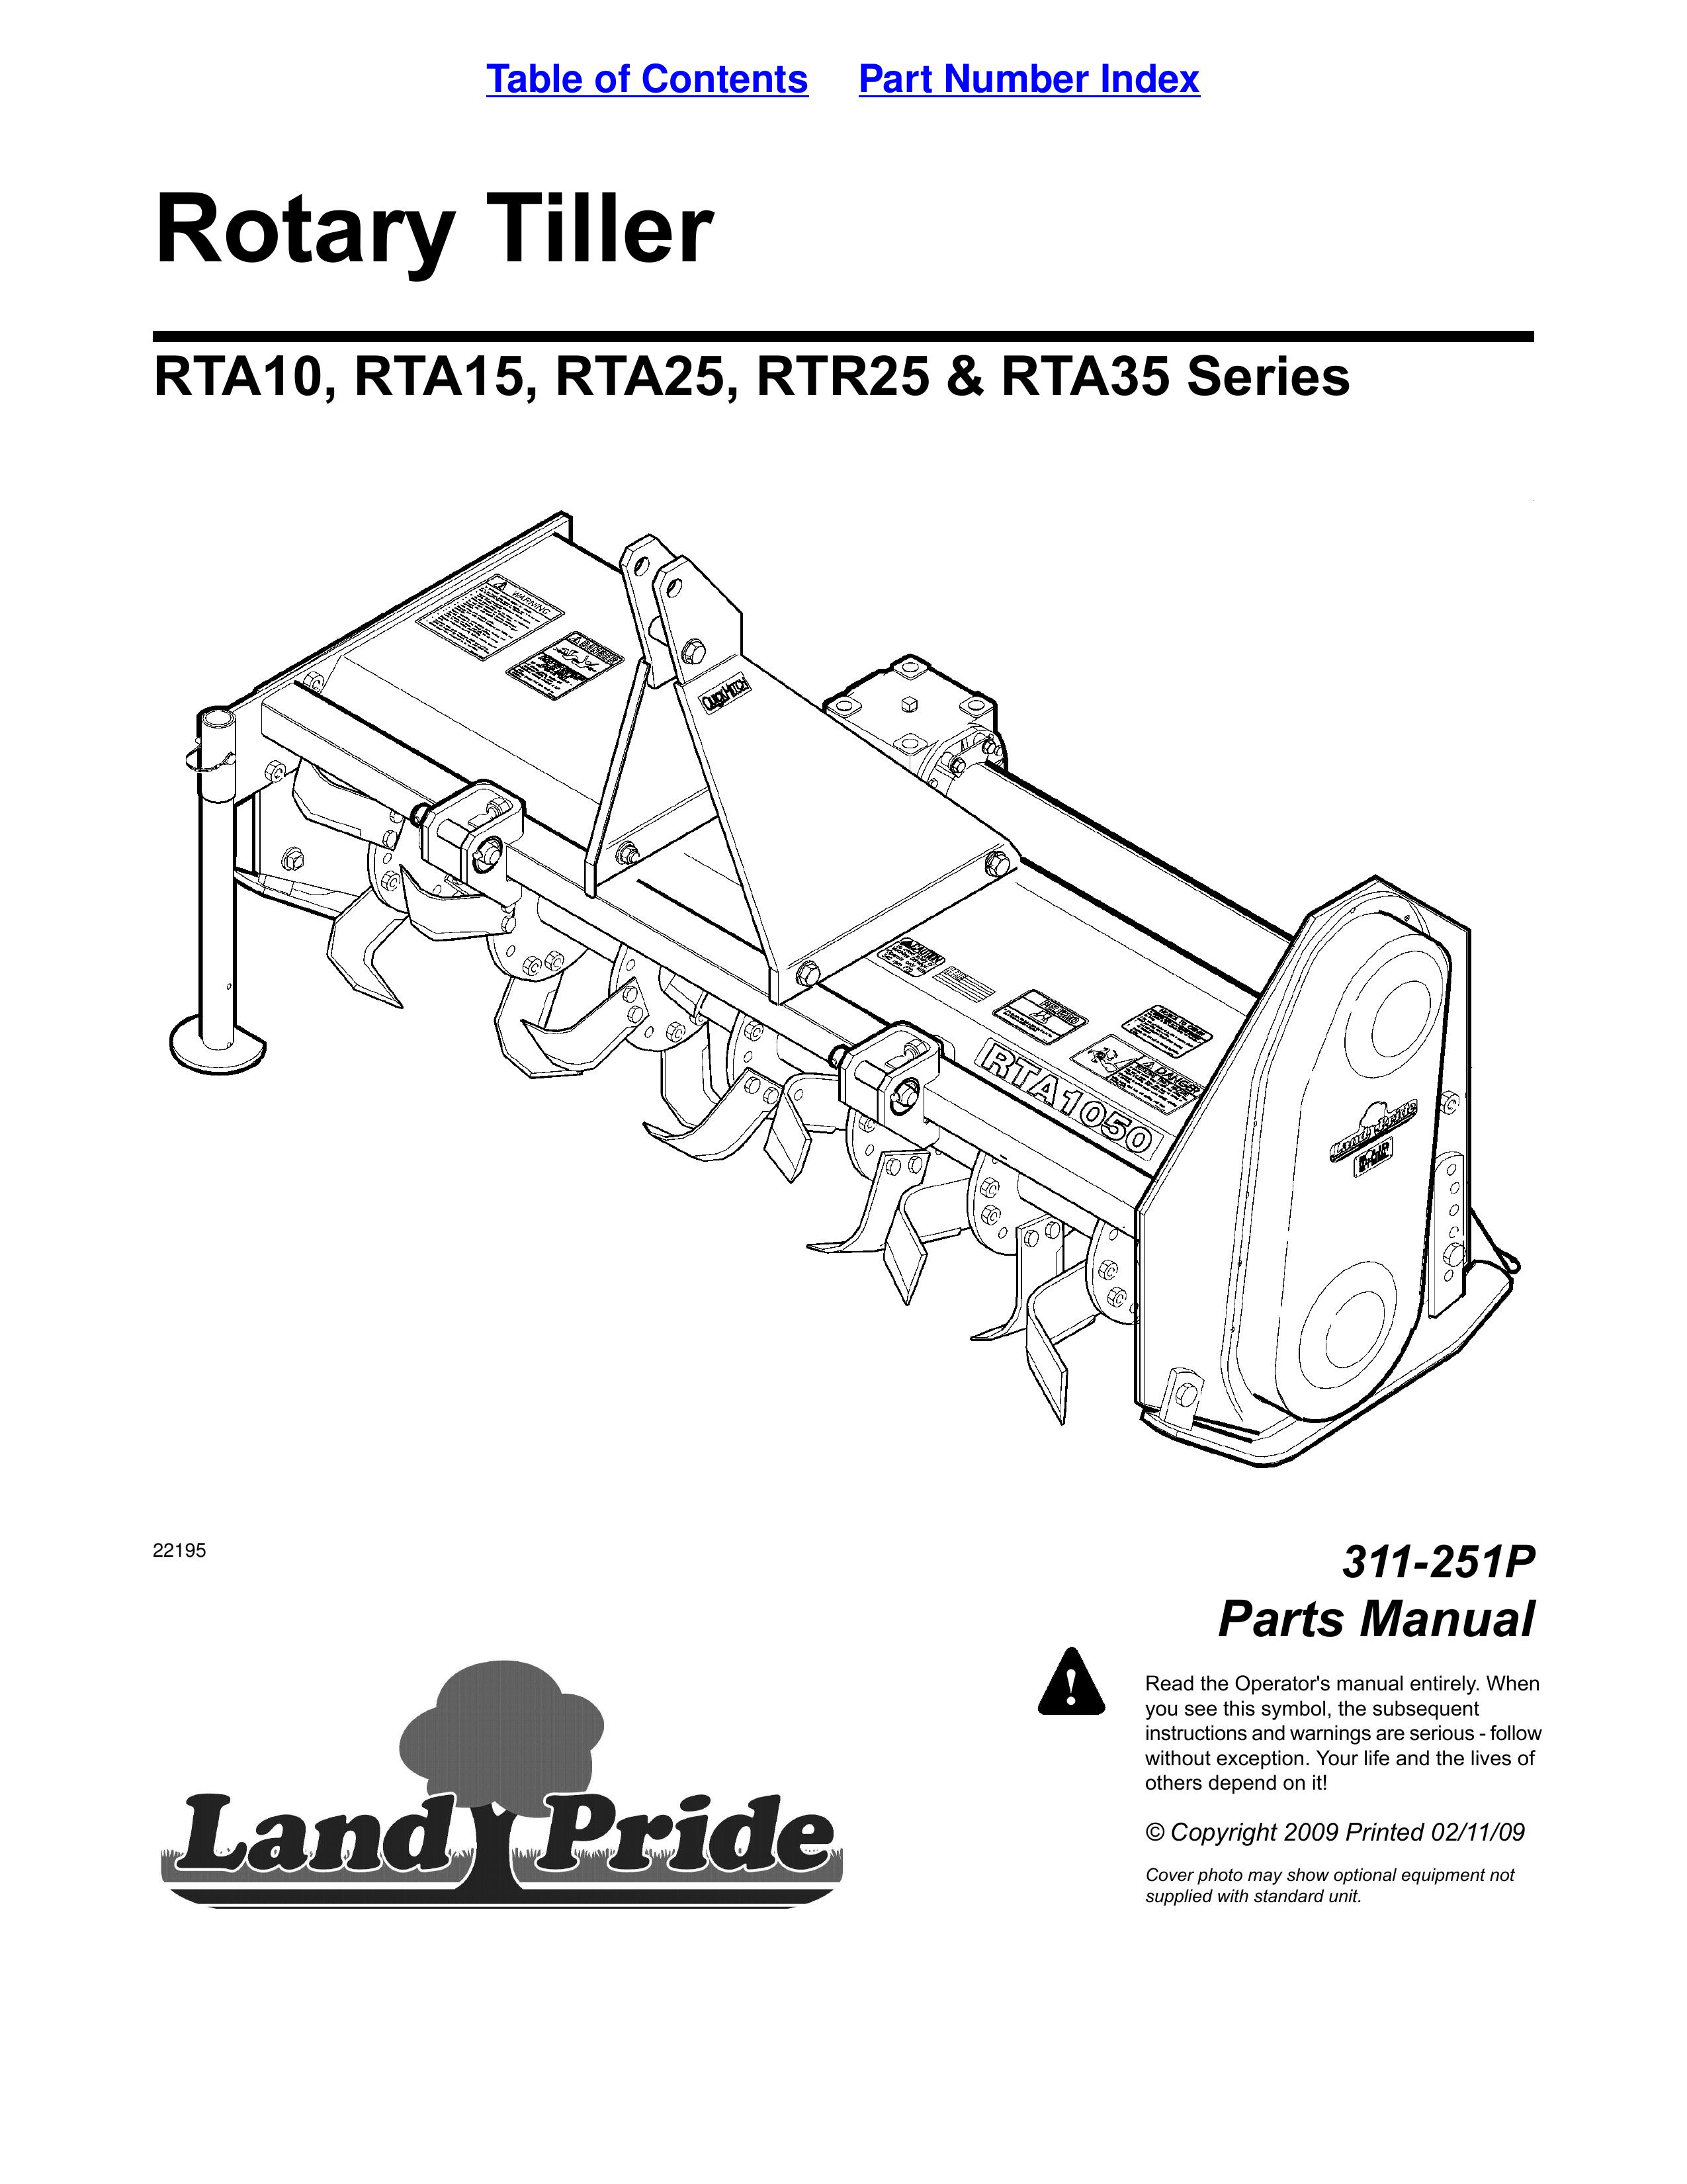 Land Pride RTA10 Tiller User Manual